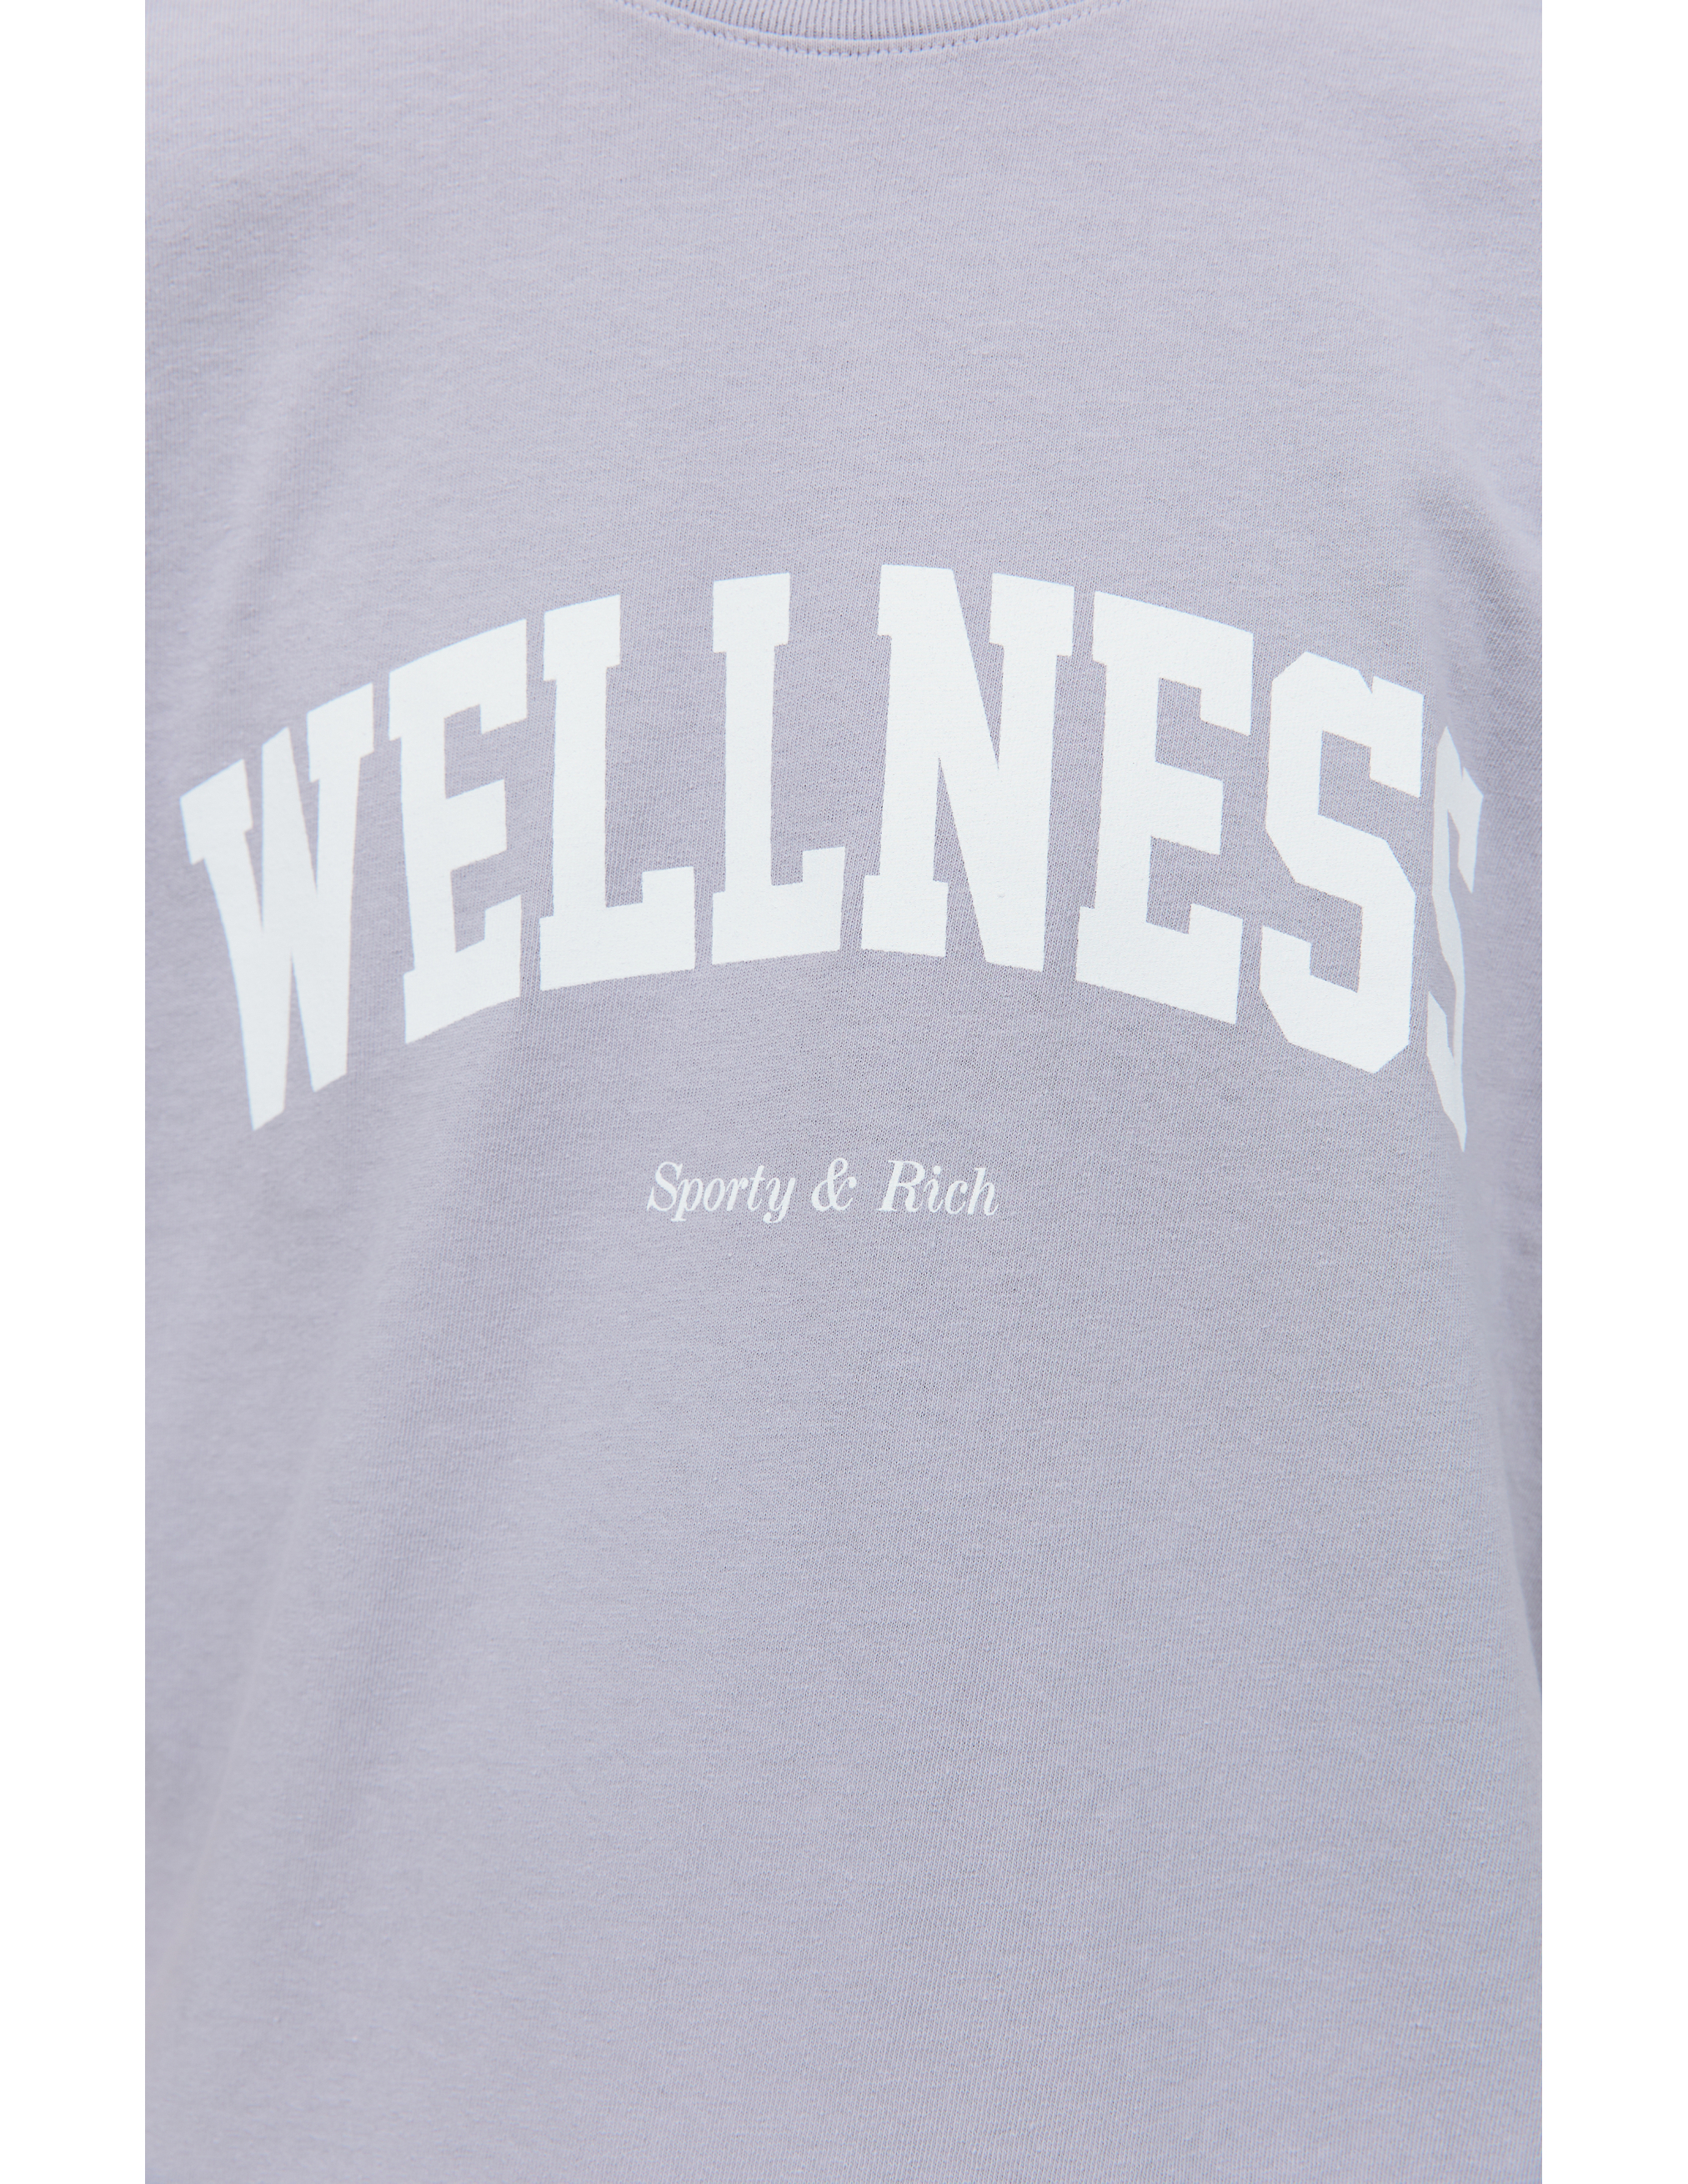 Хлопковая футболка Wellness Ivy SPORTY & RICH TS835LI, размер S;M;L;XL - фото 4